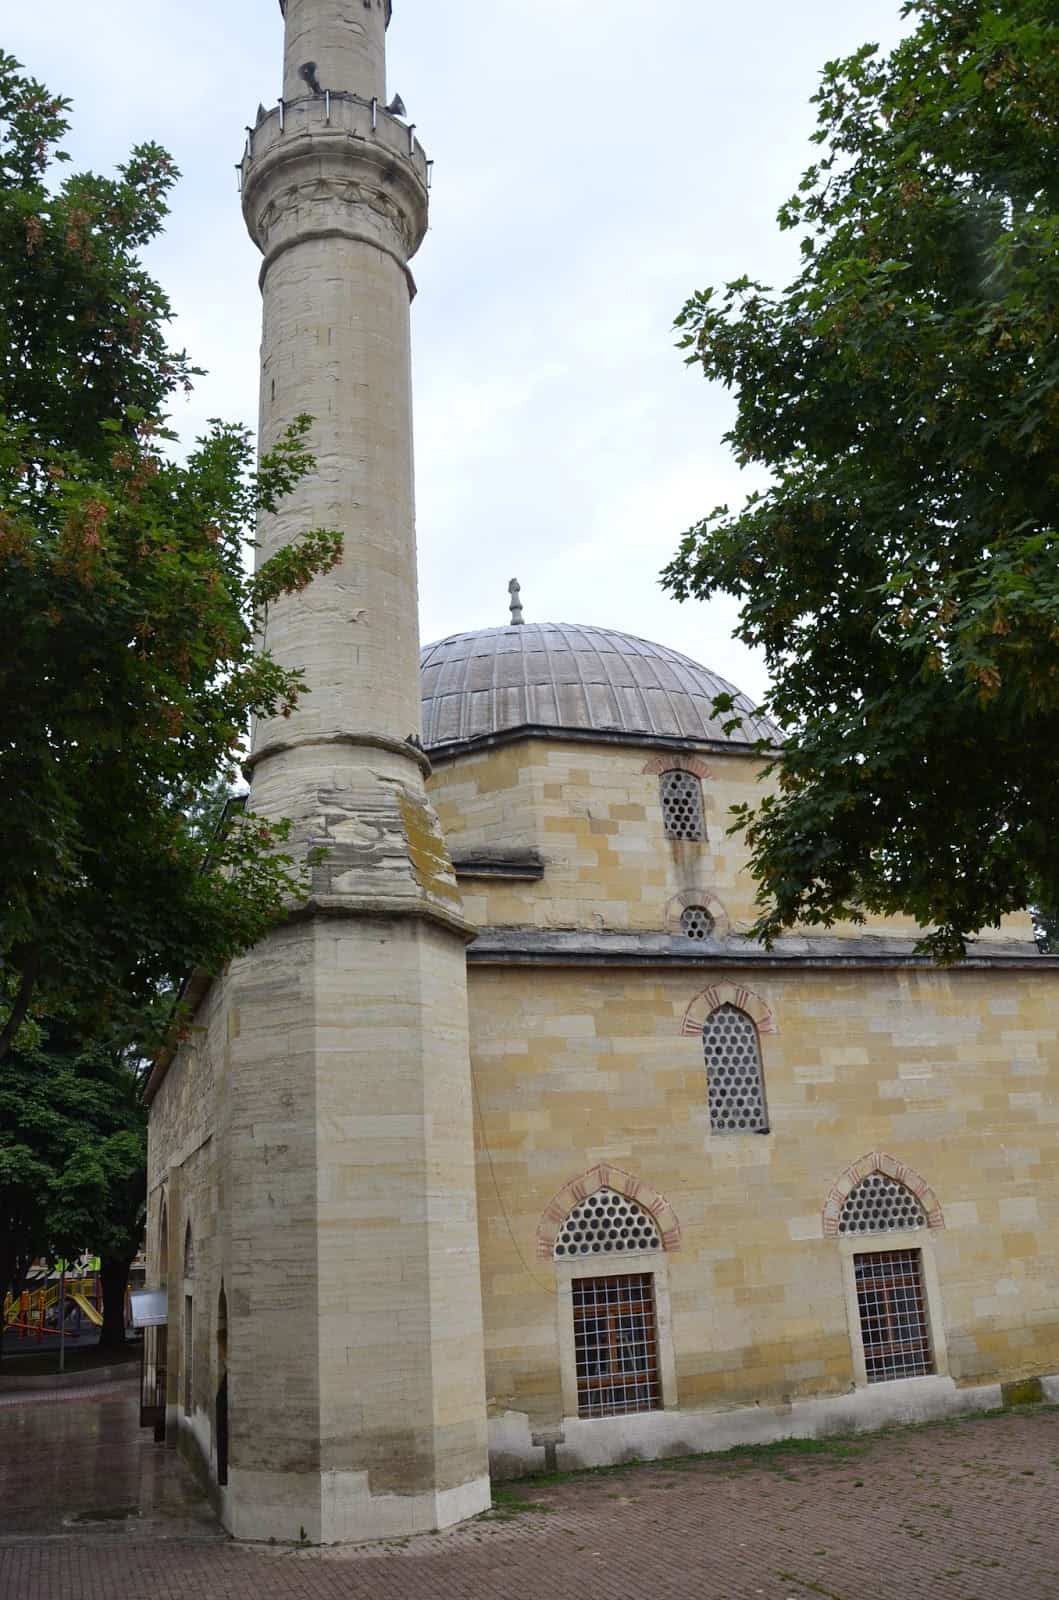 Sinan Bey Mosque in Kastamonu, Turkey